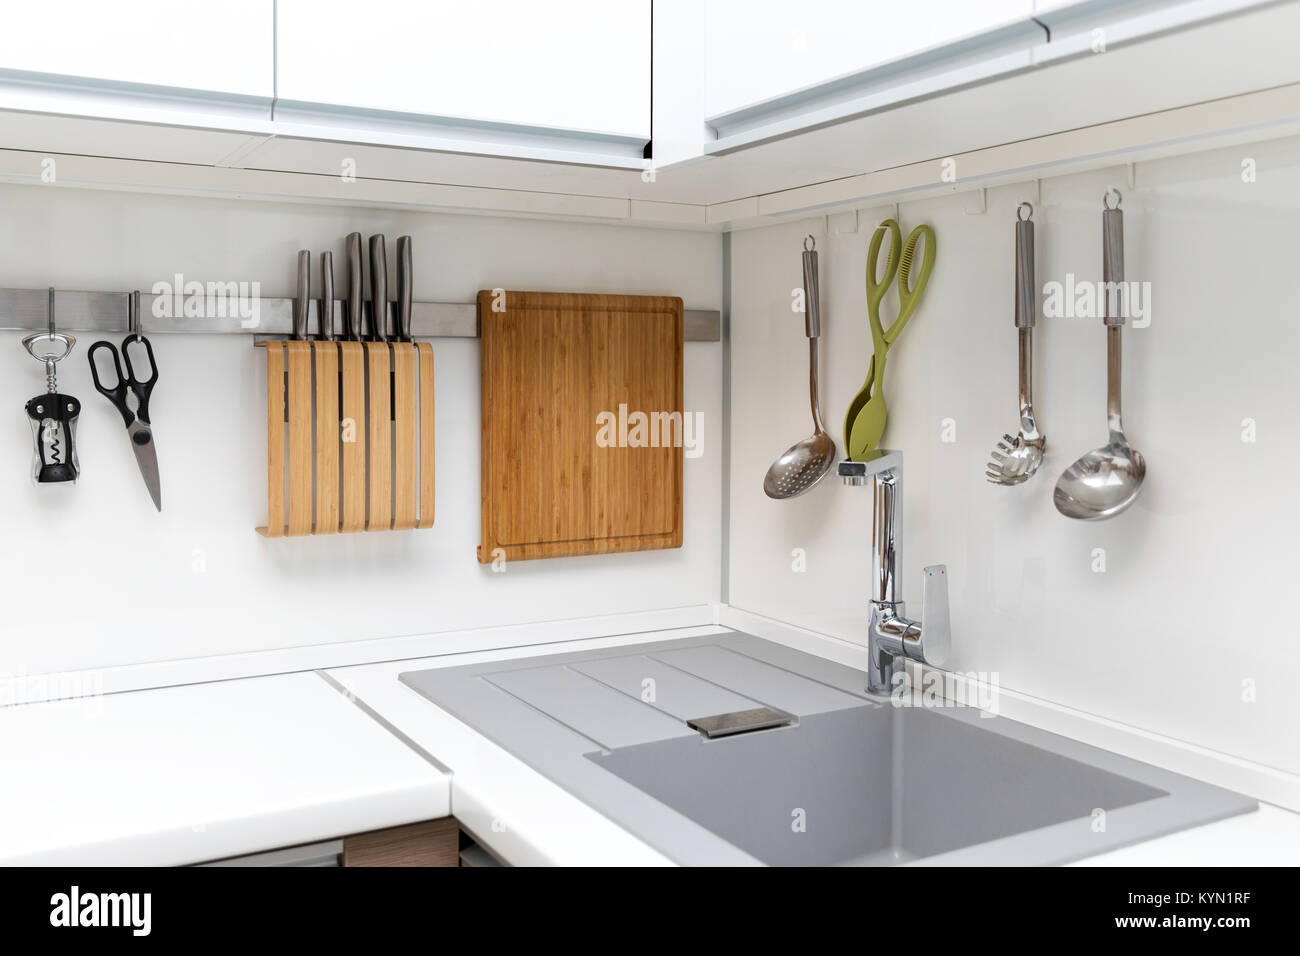 white glossy kitchen interior design with hanging utensils Stock Photo